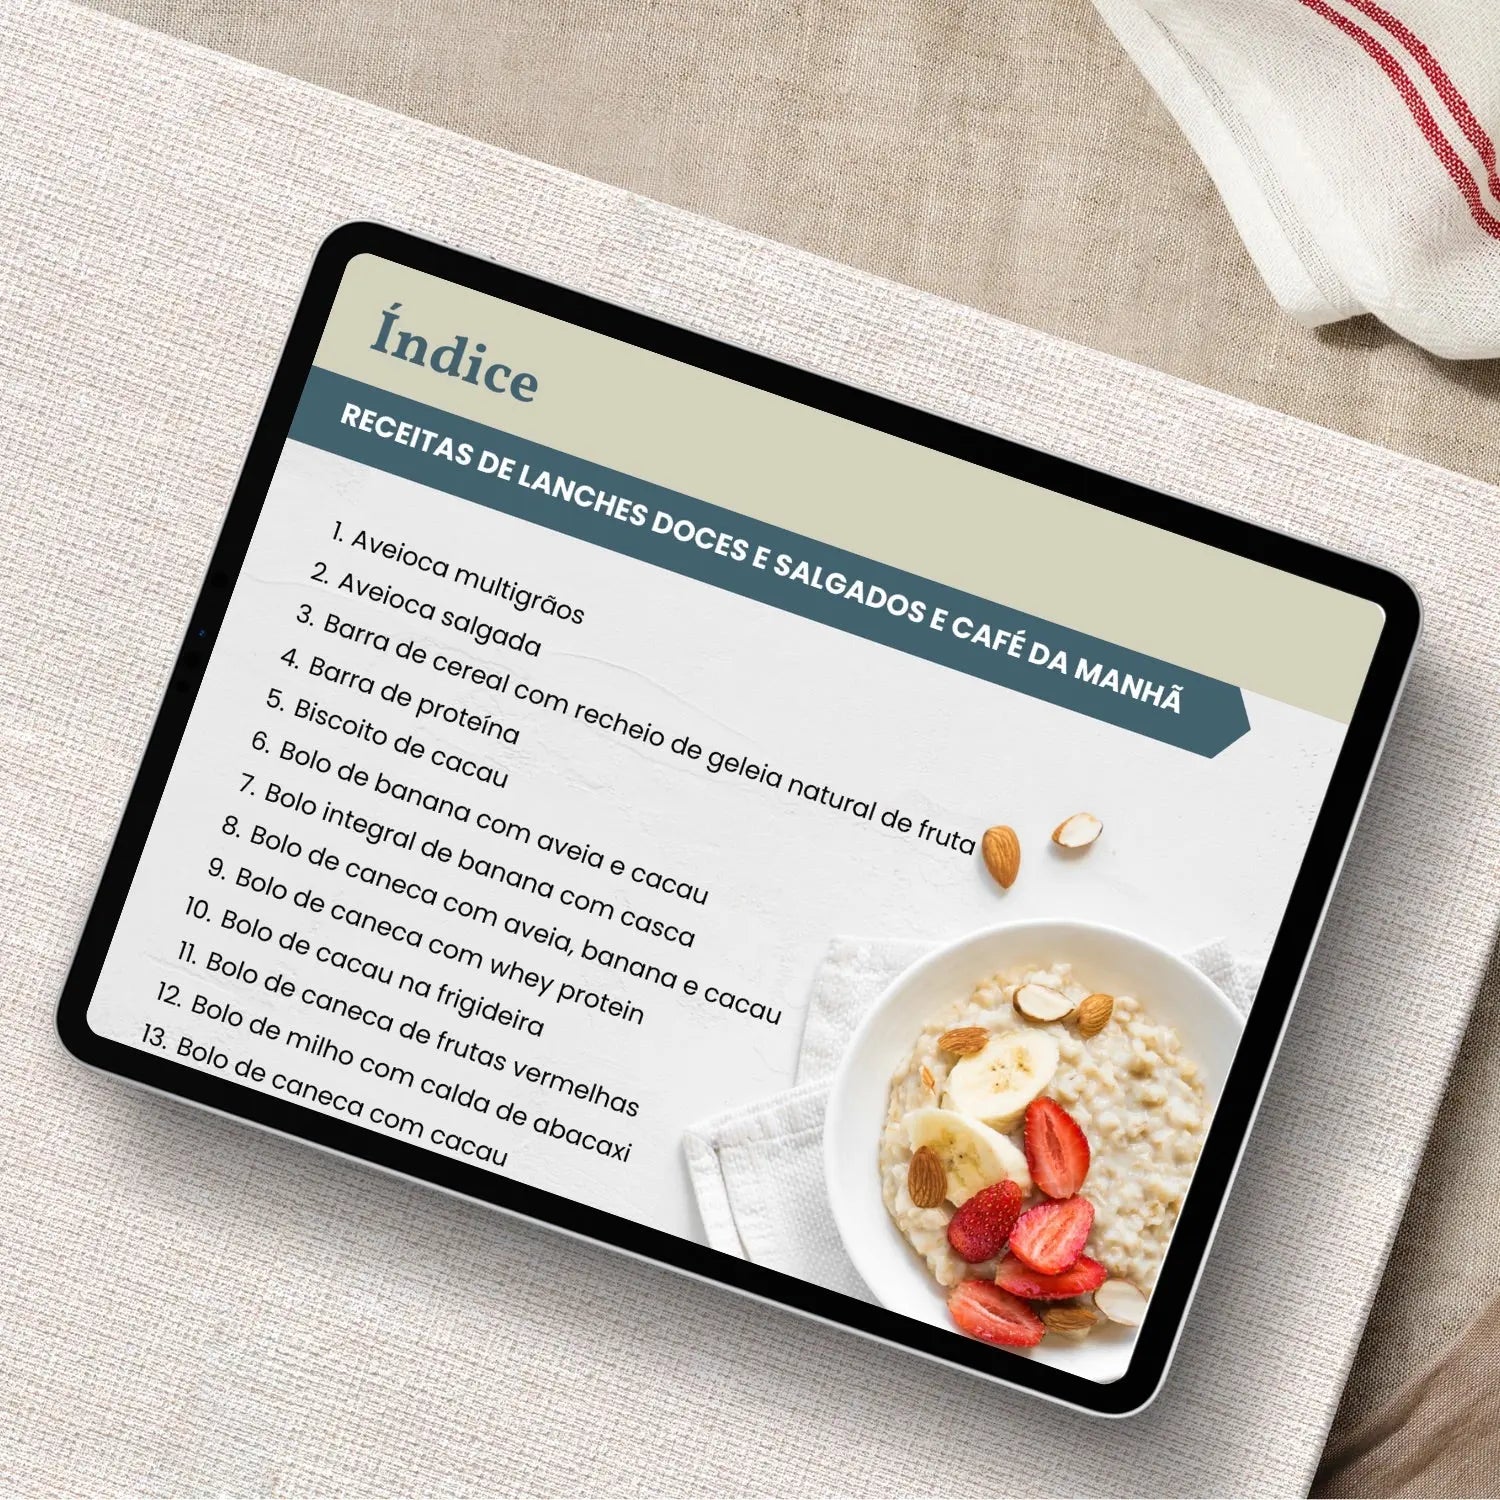 Combo Fodmap: Lista de Alimentos, Cardápio e Receitas - Intestino Feliz- E-books